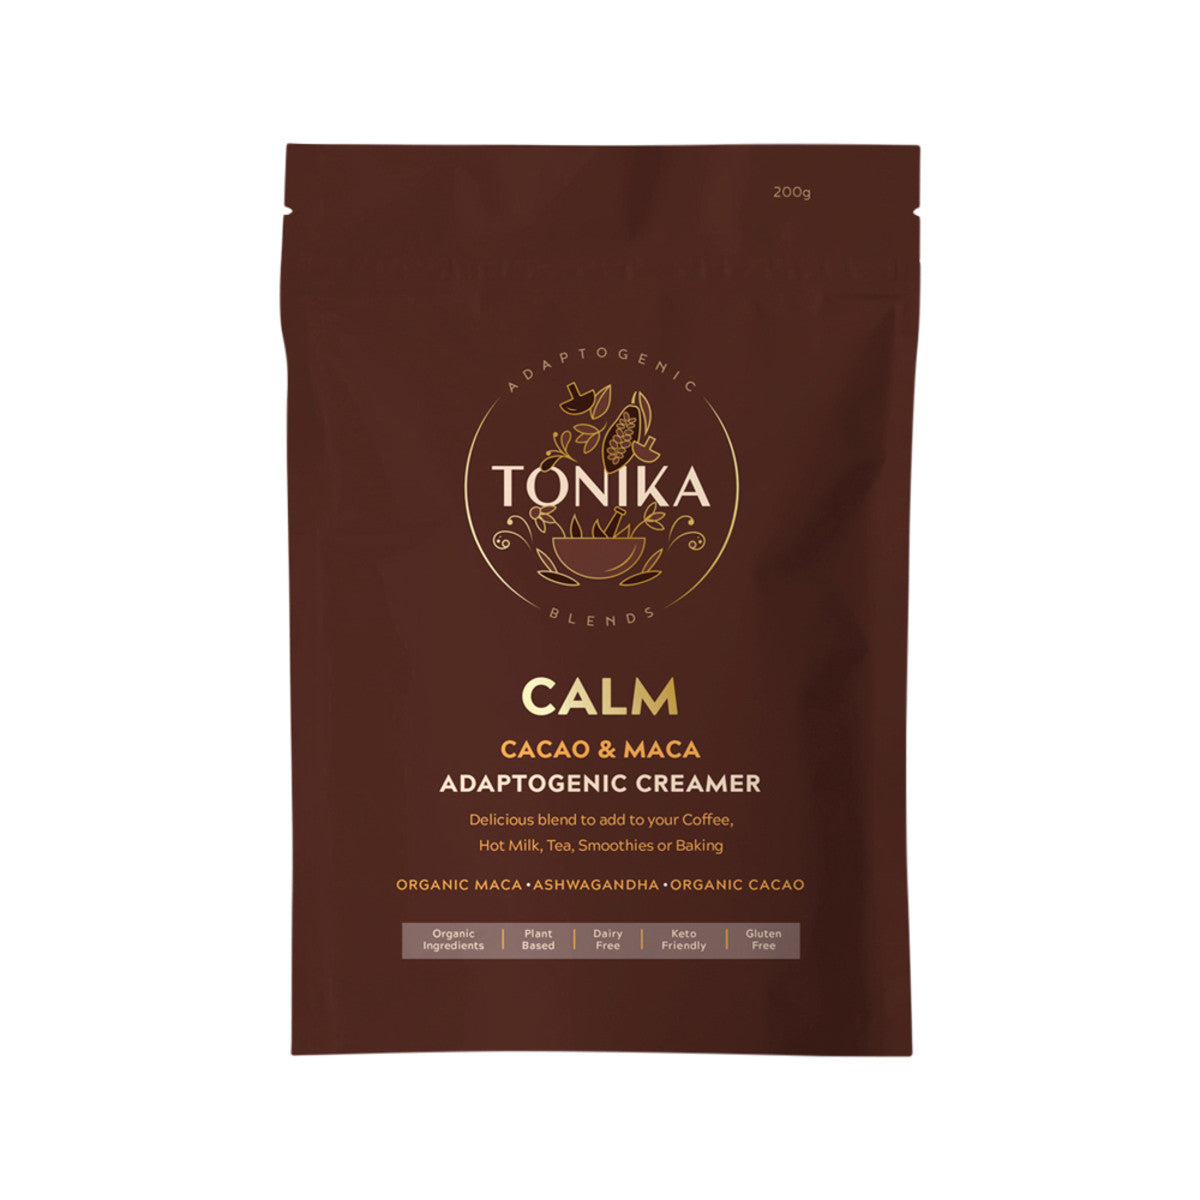 Tonika Adaptogenic Creamer Calm (Cacao Maca) 200g